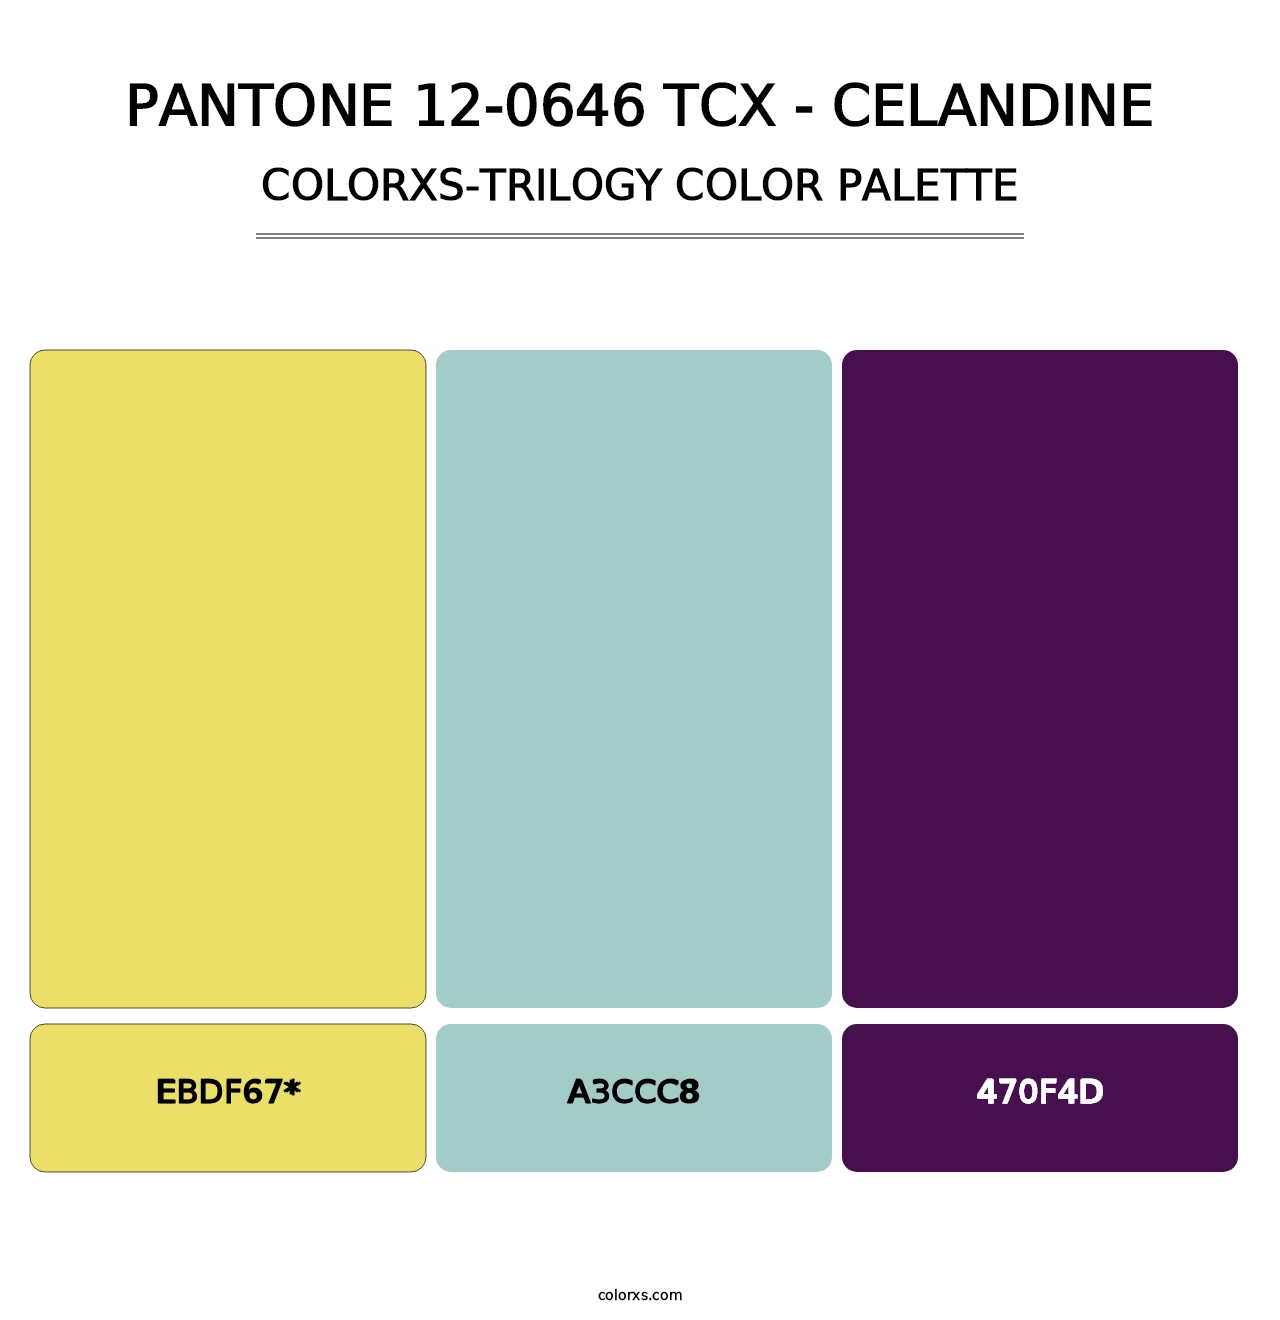 PANTONE 12-0646 TCX - Celandine - Colorxs Trilogy Palette